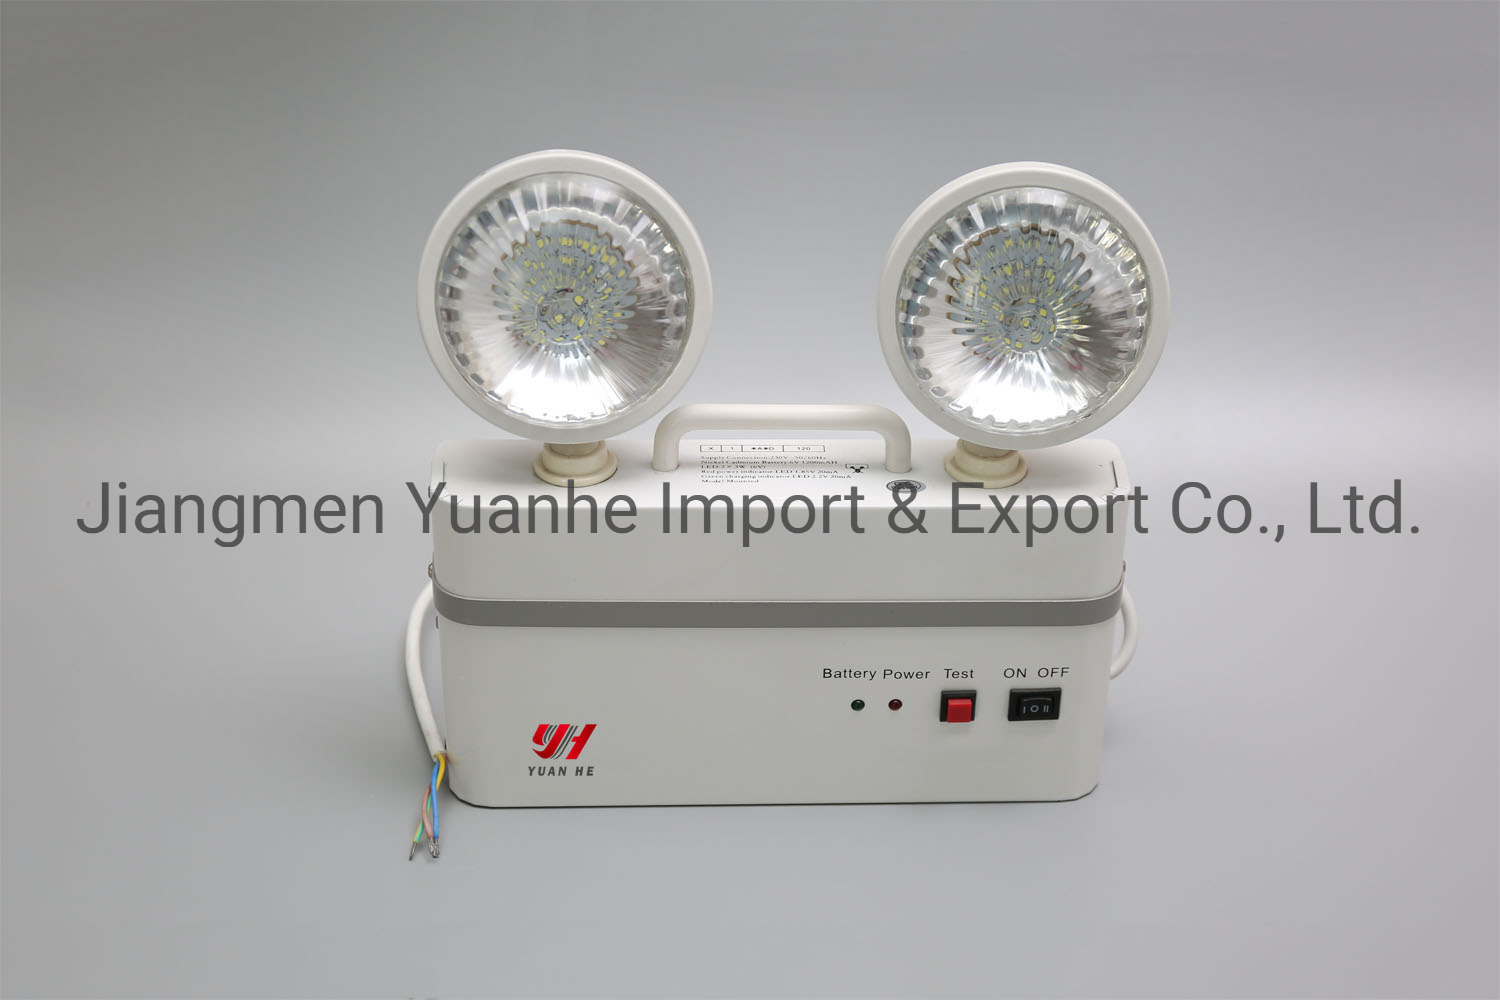 Classic Dual Head / Twin Spot LED Emergency Light